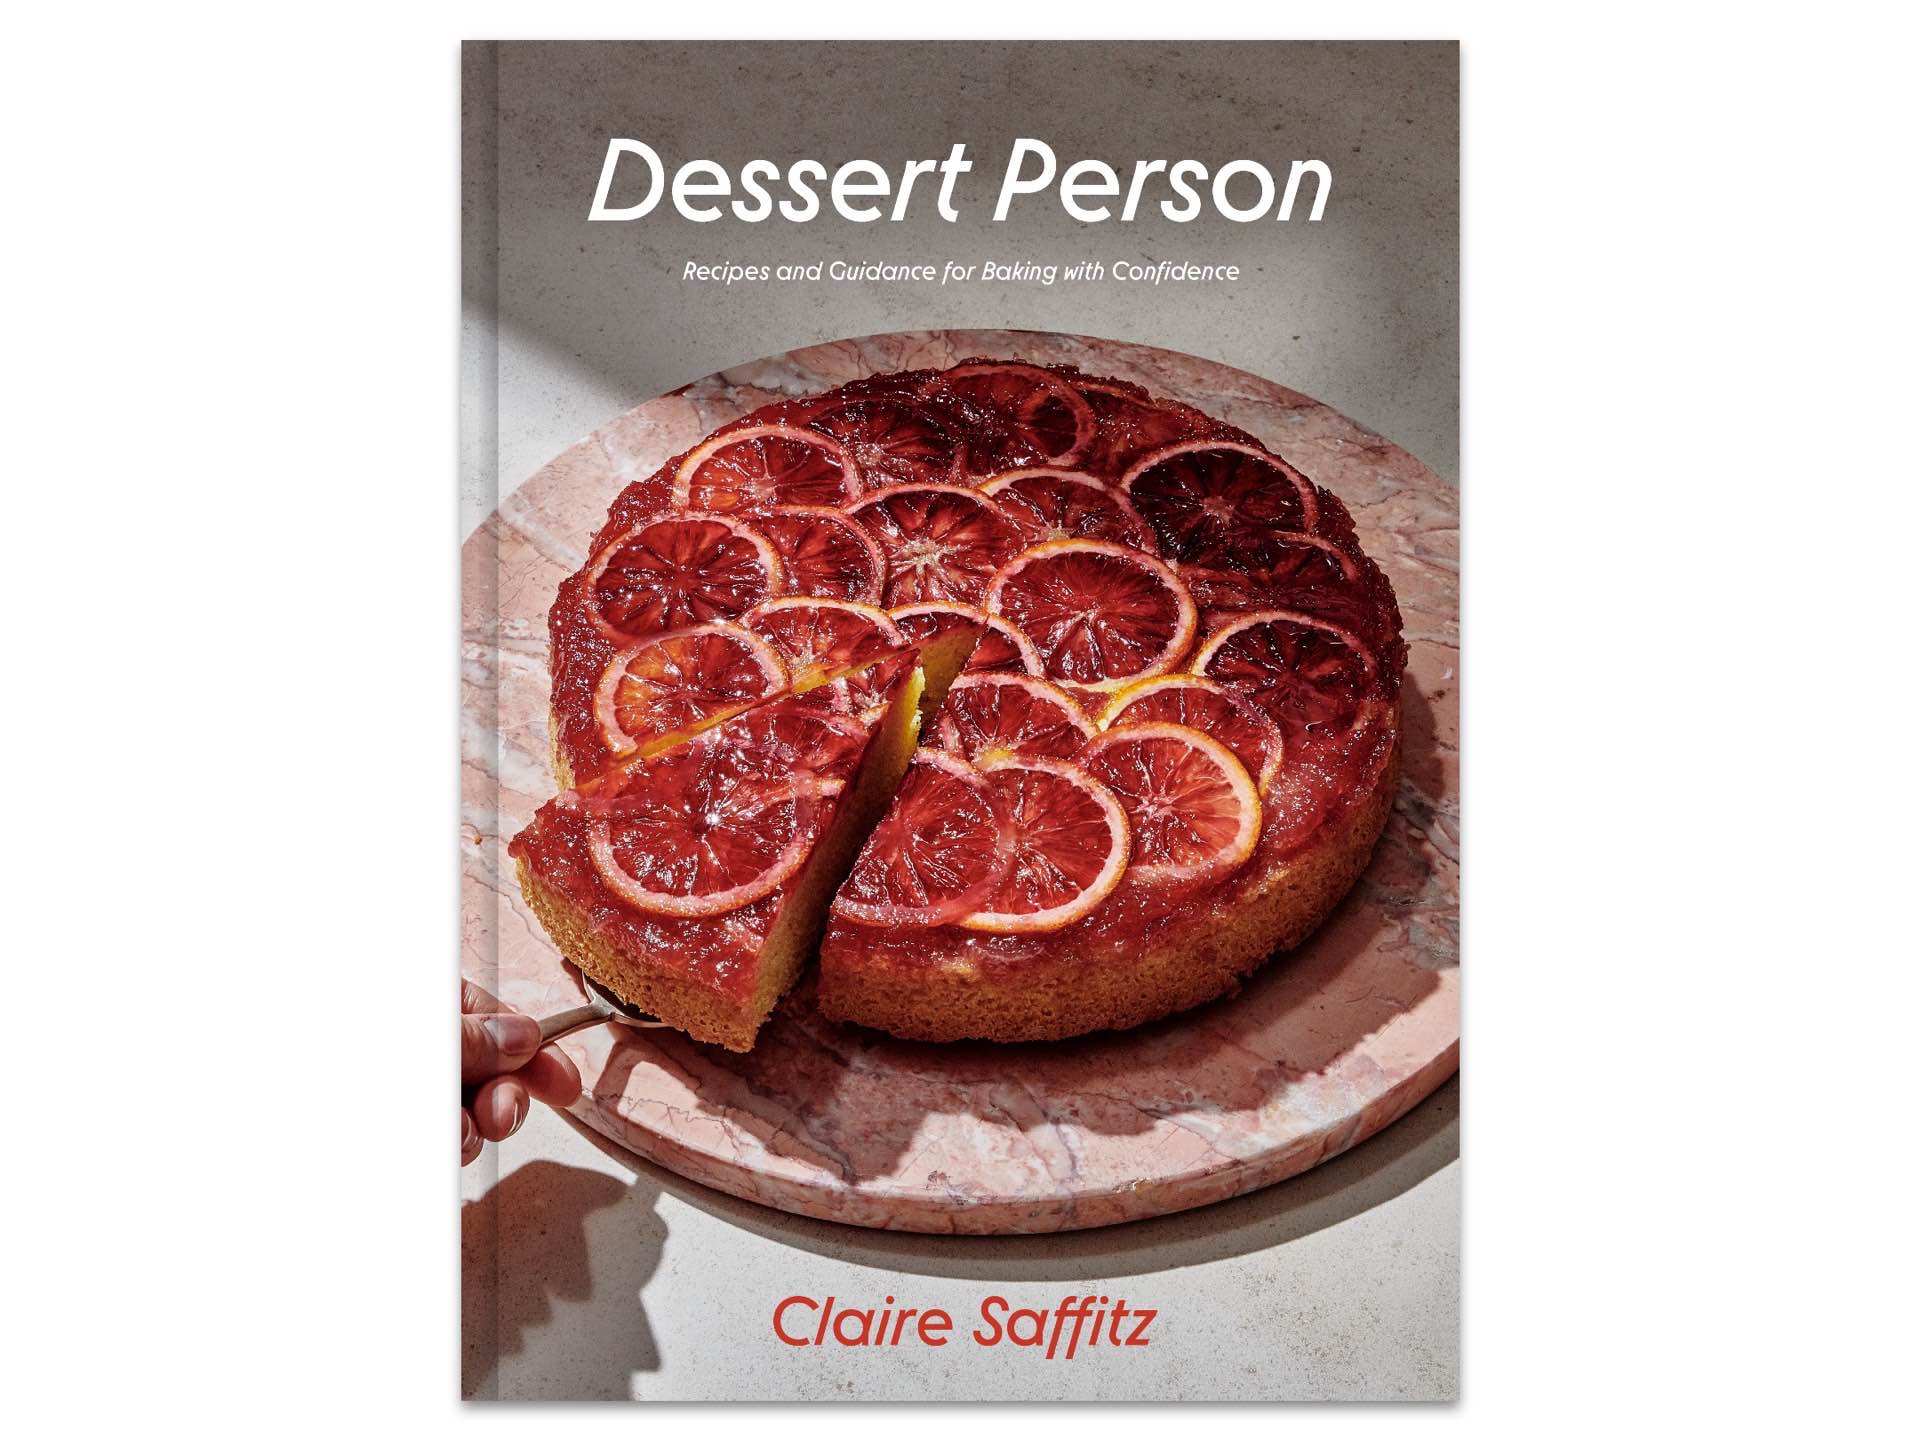 dessert-person-cookbook-by-claire-saffitz